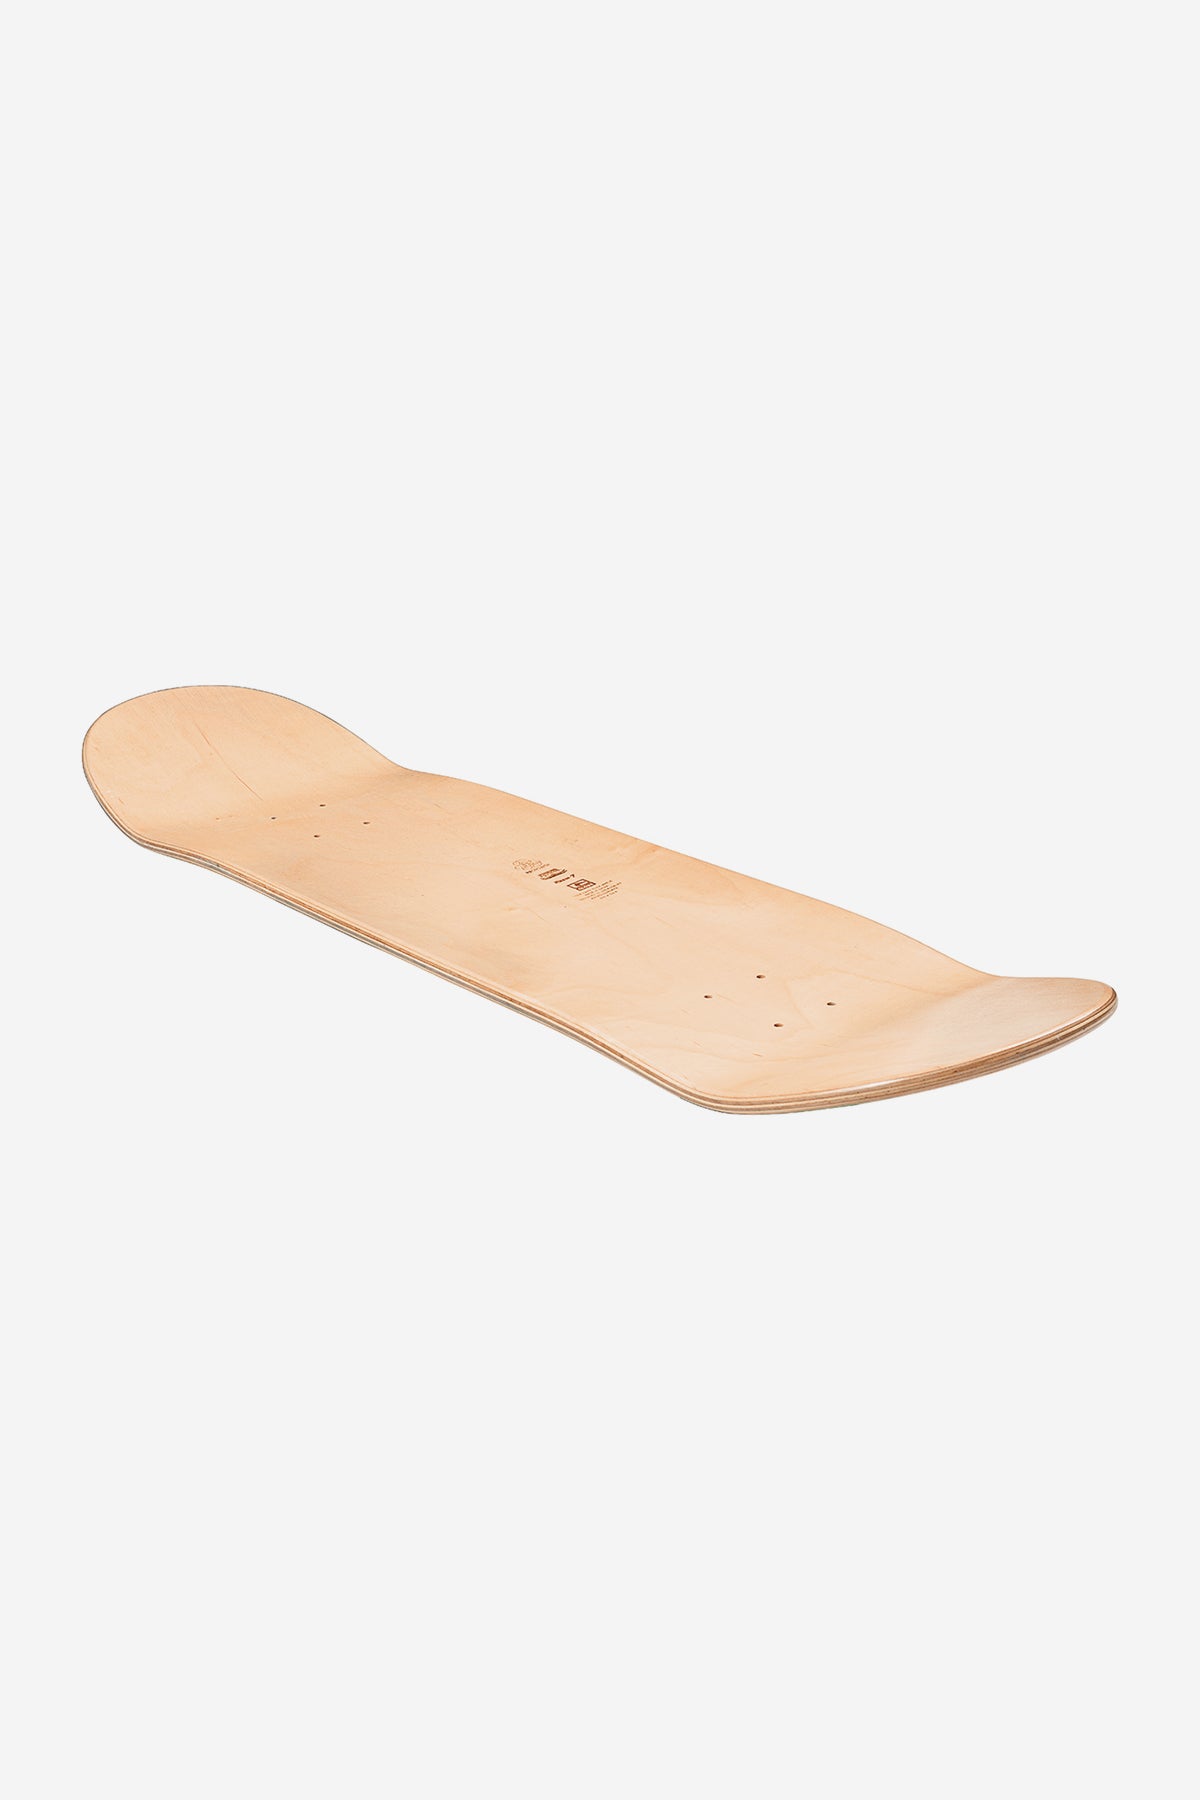 Goodstock - Sahara - 8.375" Skateboard Deck